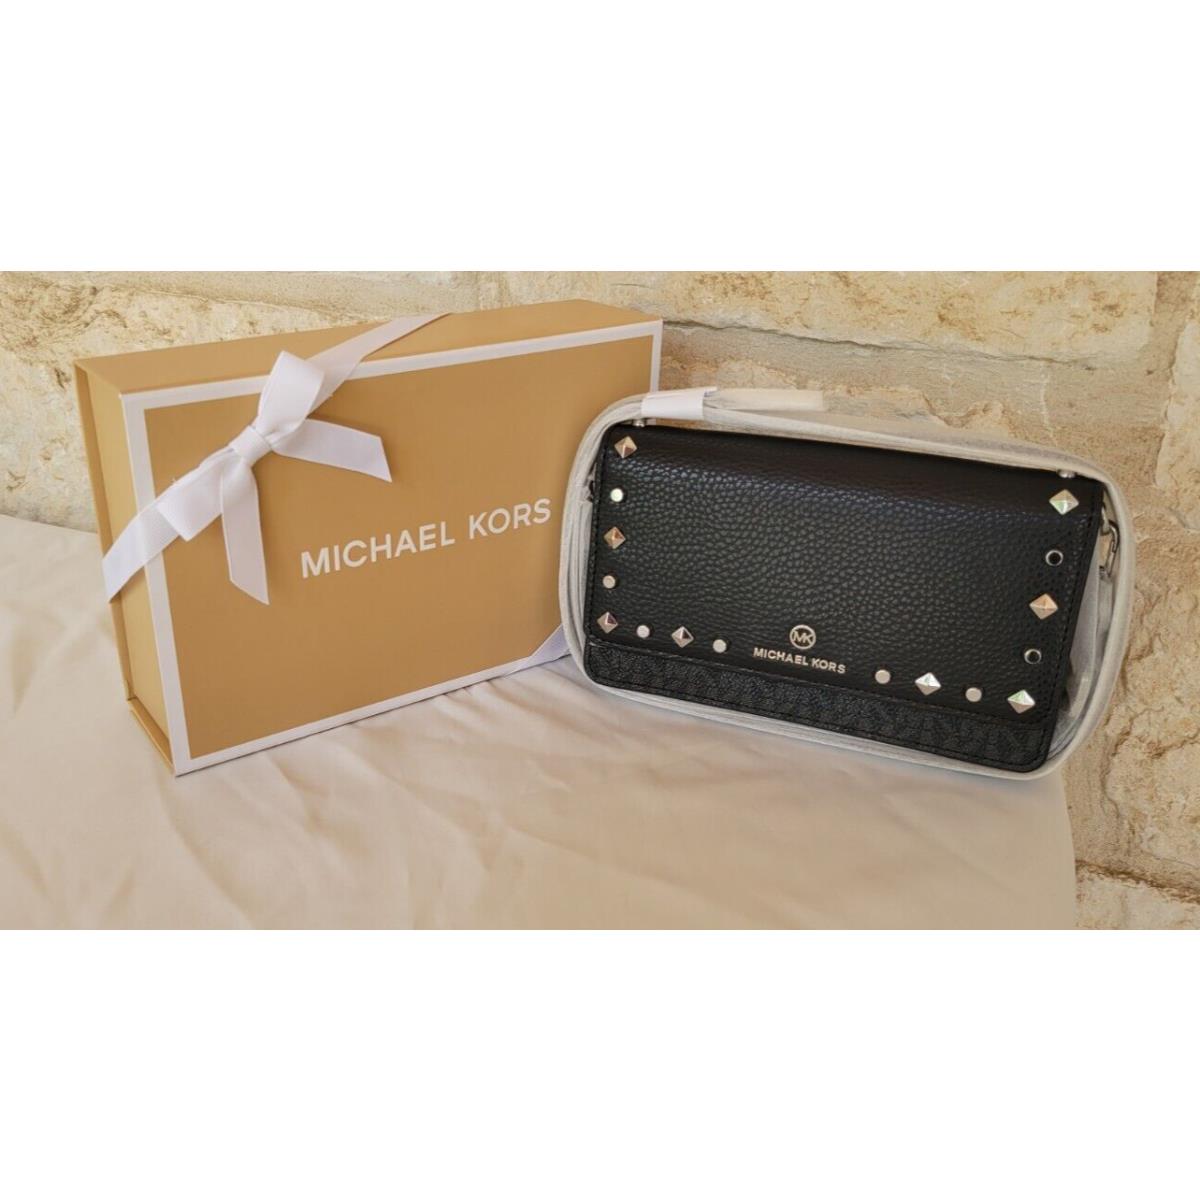 Michael Kors Jet Set Small Leather/logo Crossbody Bag Black Silver Studded